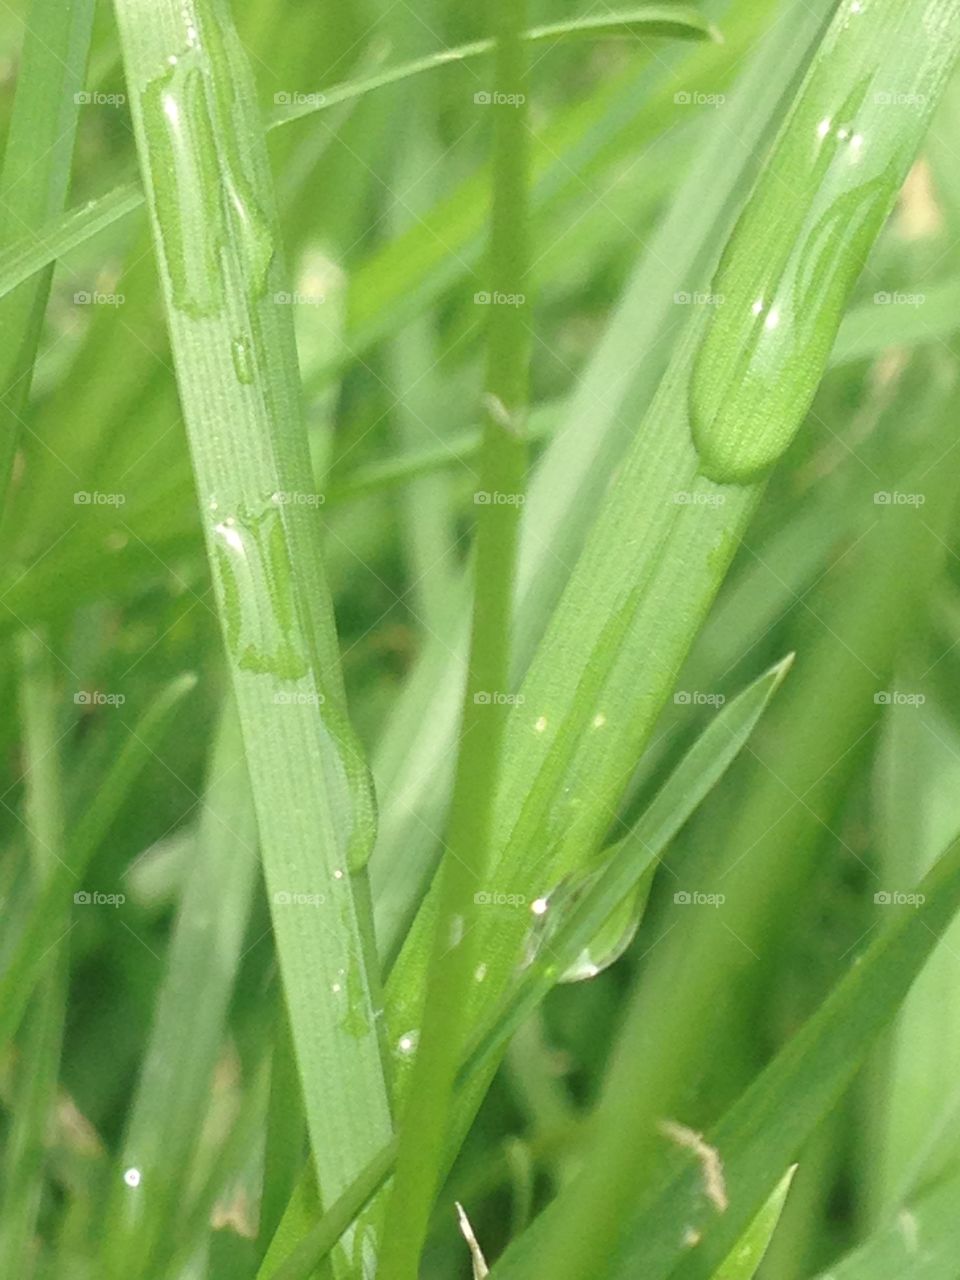 Grass after a rain!. Glass in the yard after a light rain!